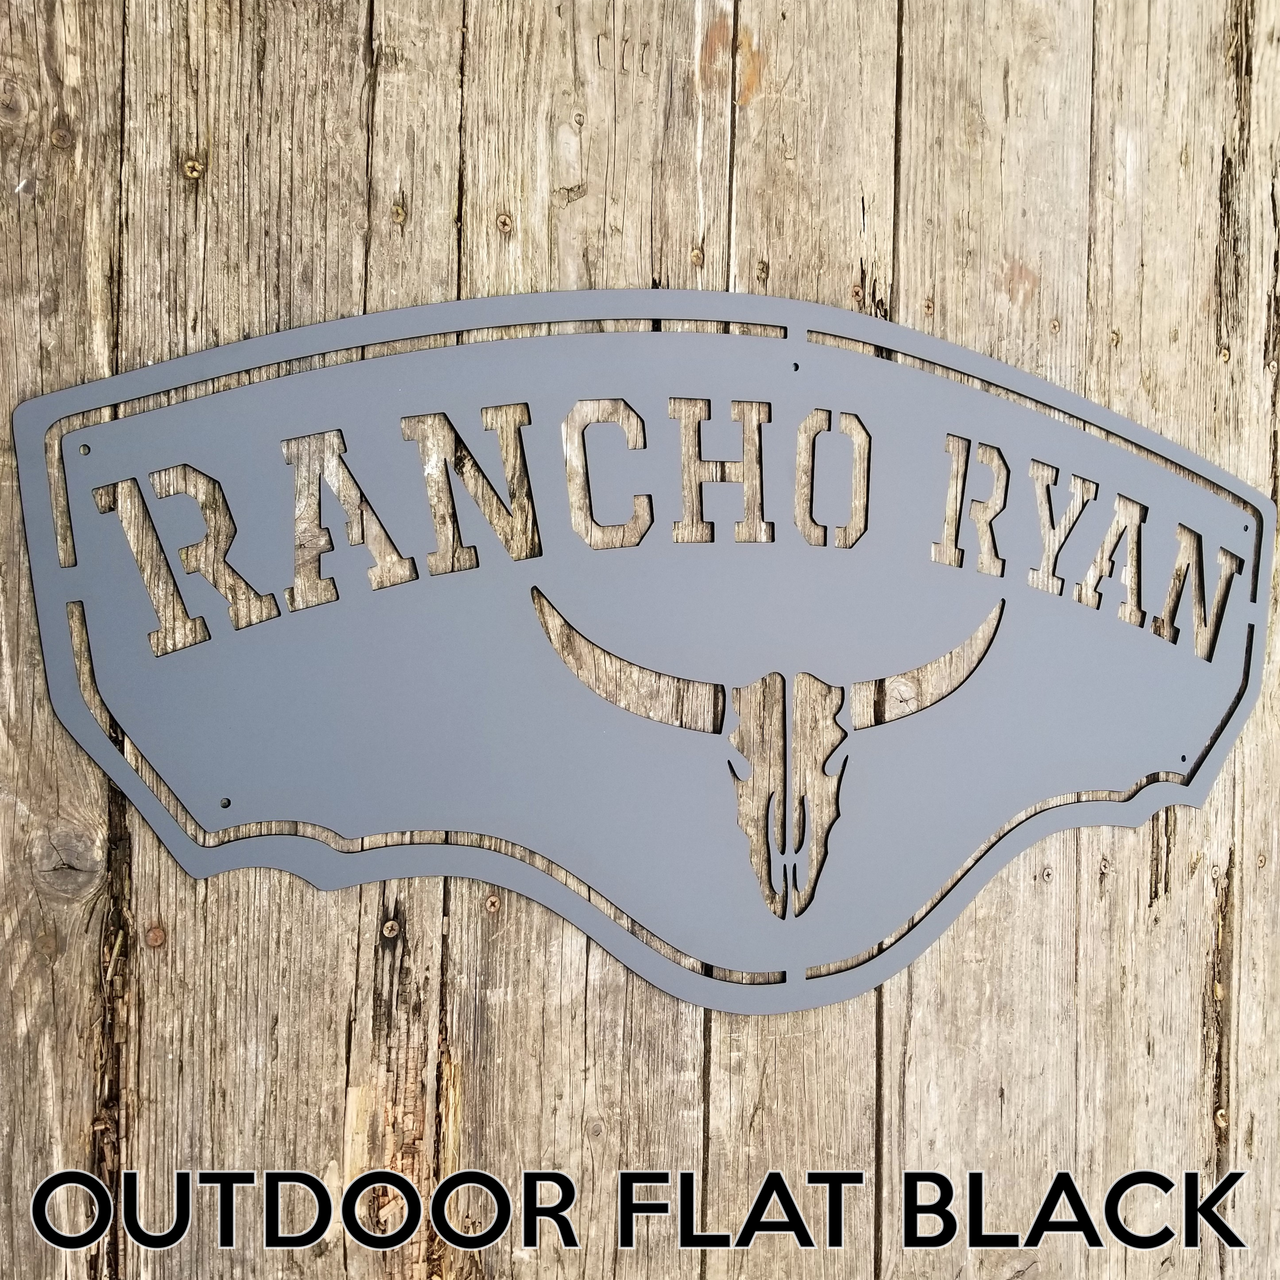 Longhorn Ranch Metal Sign - Personalized Cowboy Western Decor - Texas Saloon Wall Art